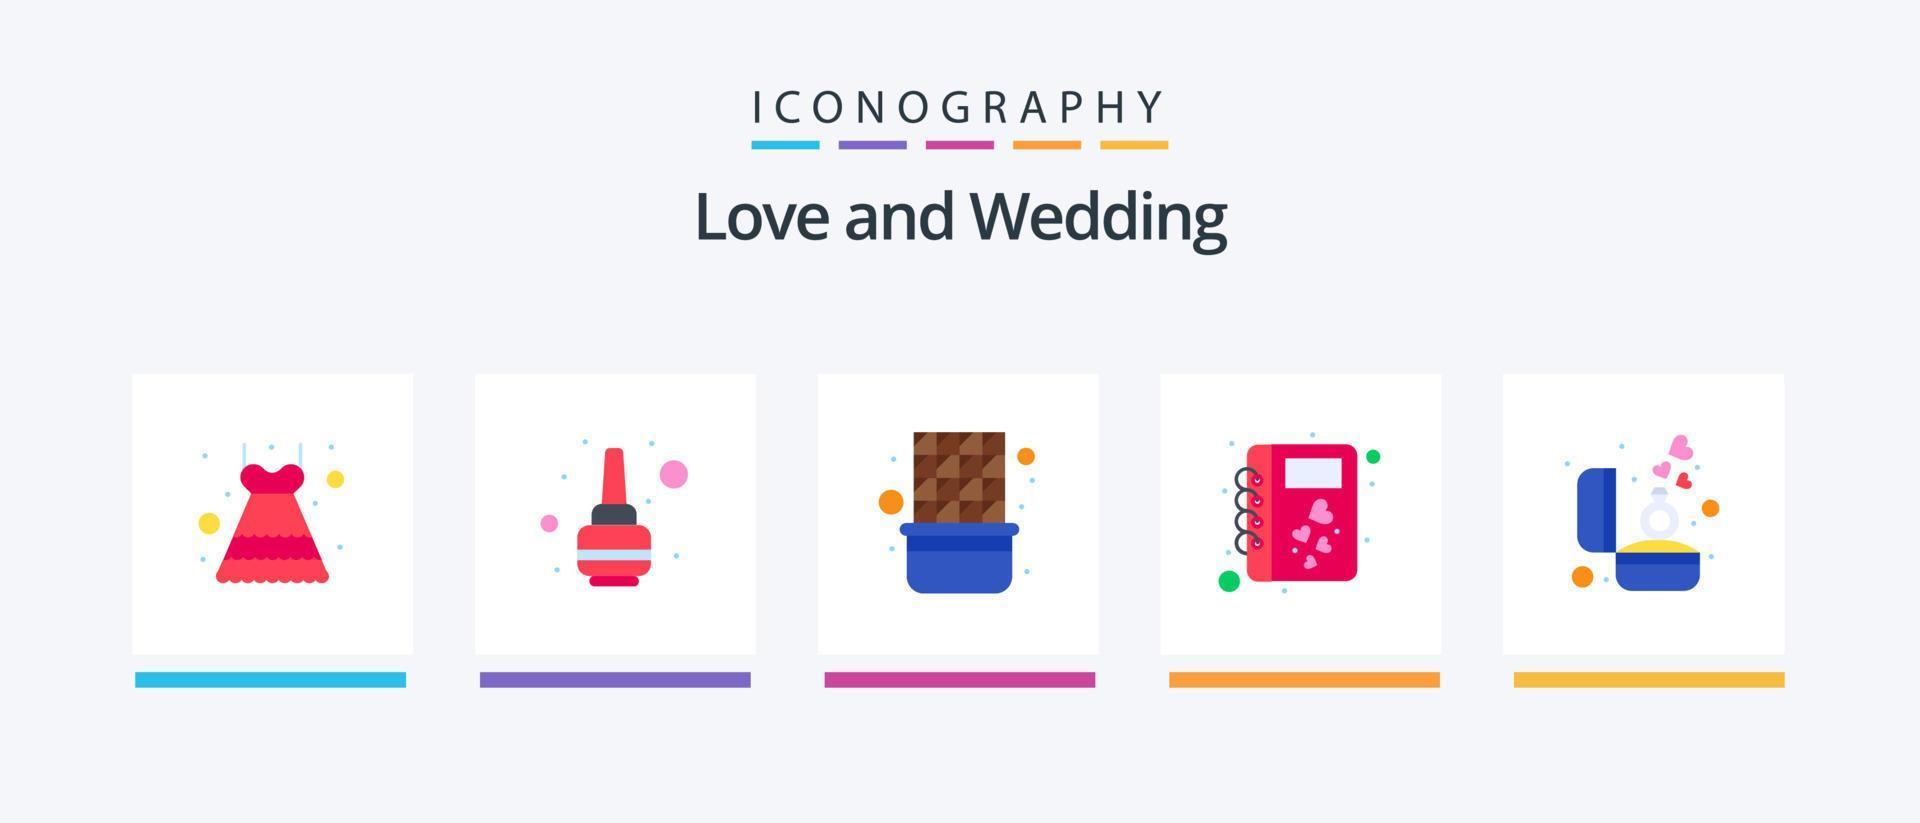 bröllop platt 5 ikon packa Inklusive diamant. romantik. choklad. kärlek. bok. kreativ ikoner design vektor